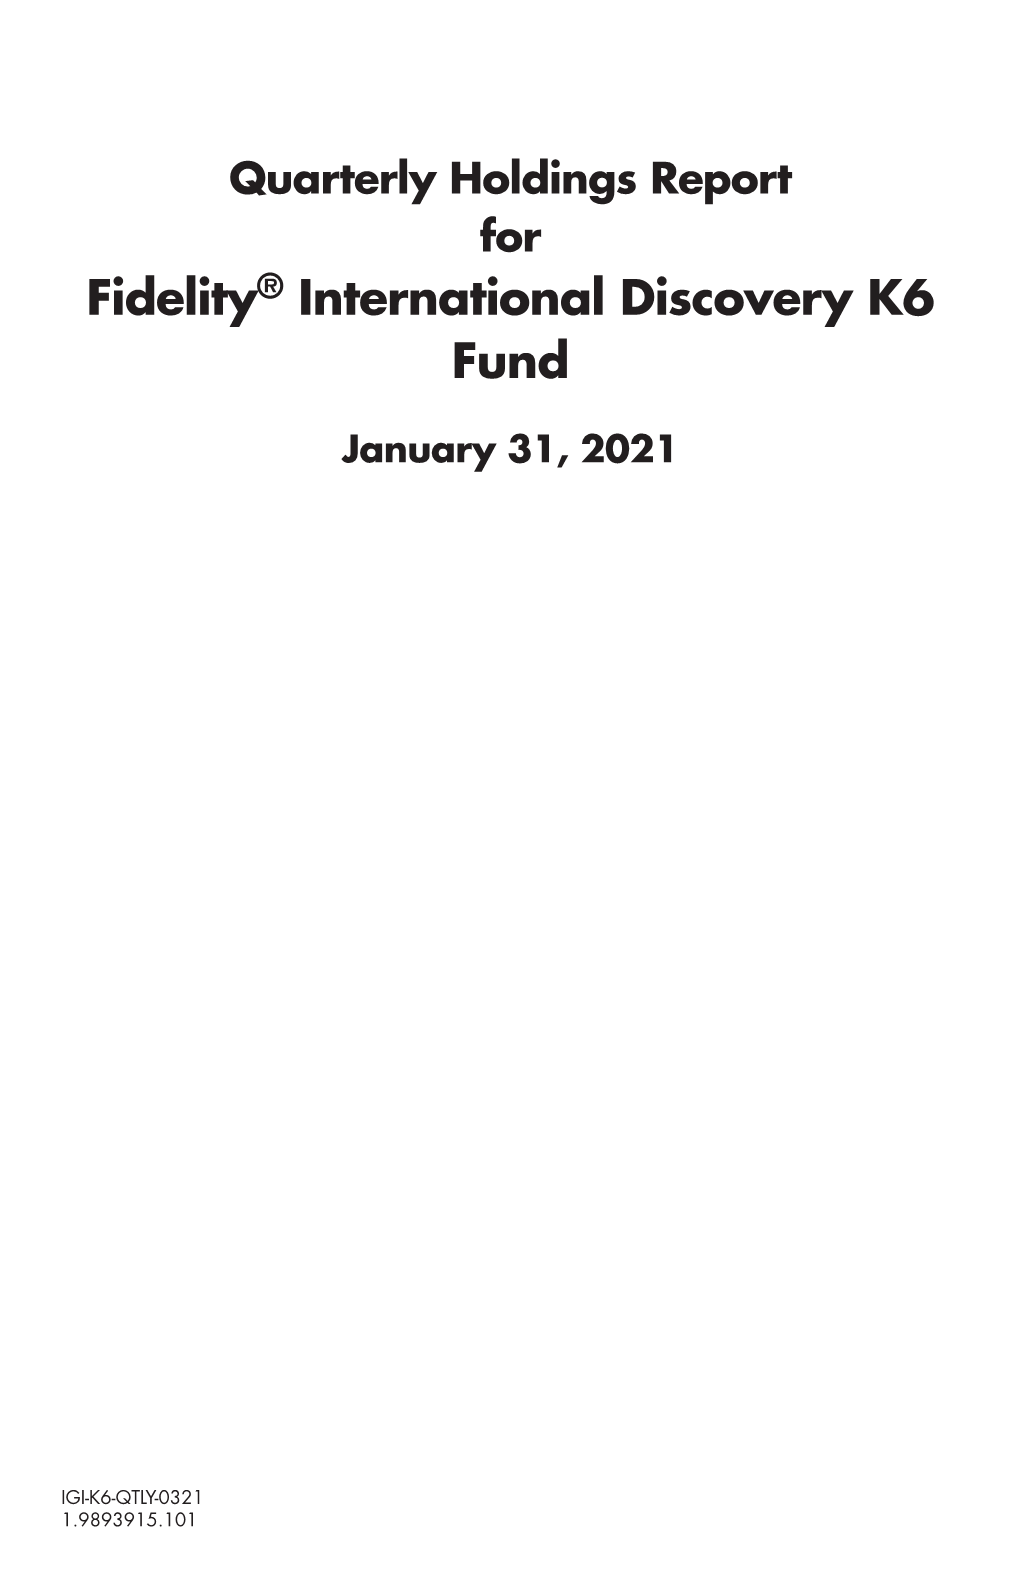 Fidelity® International Discovery K6 Fund